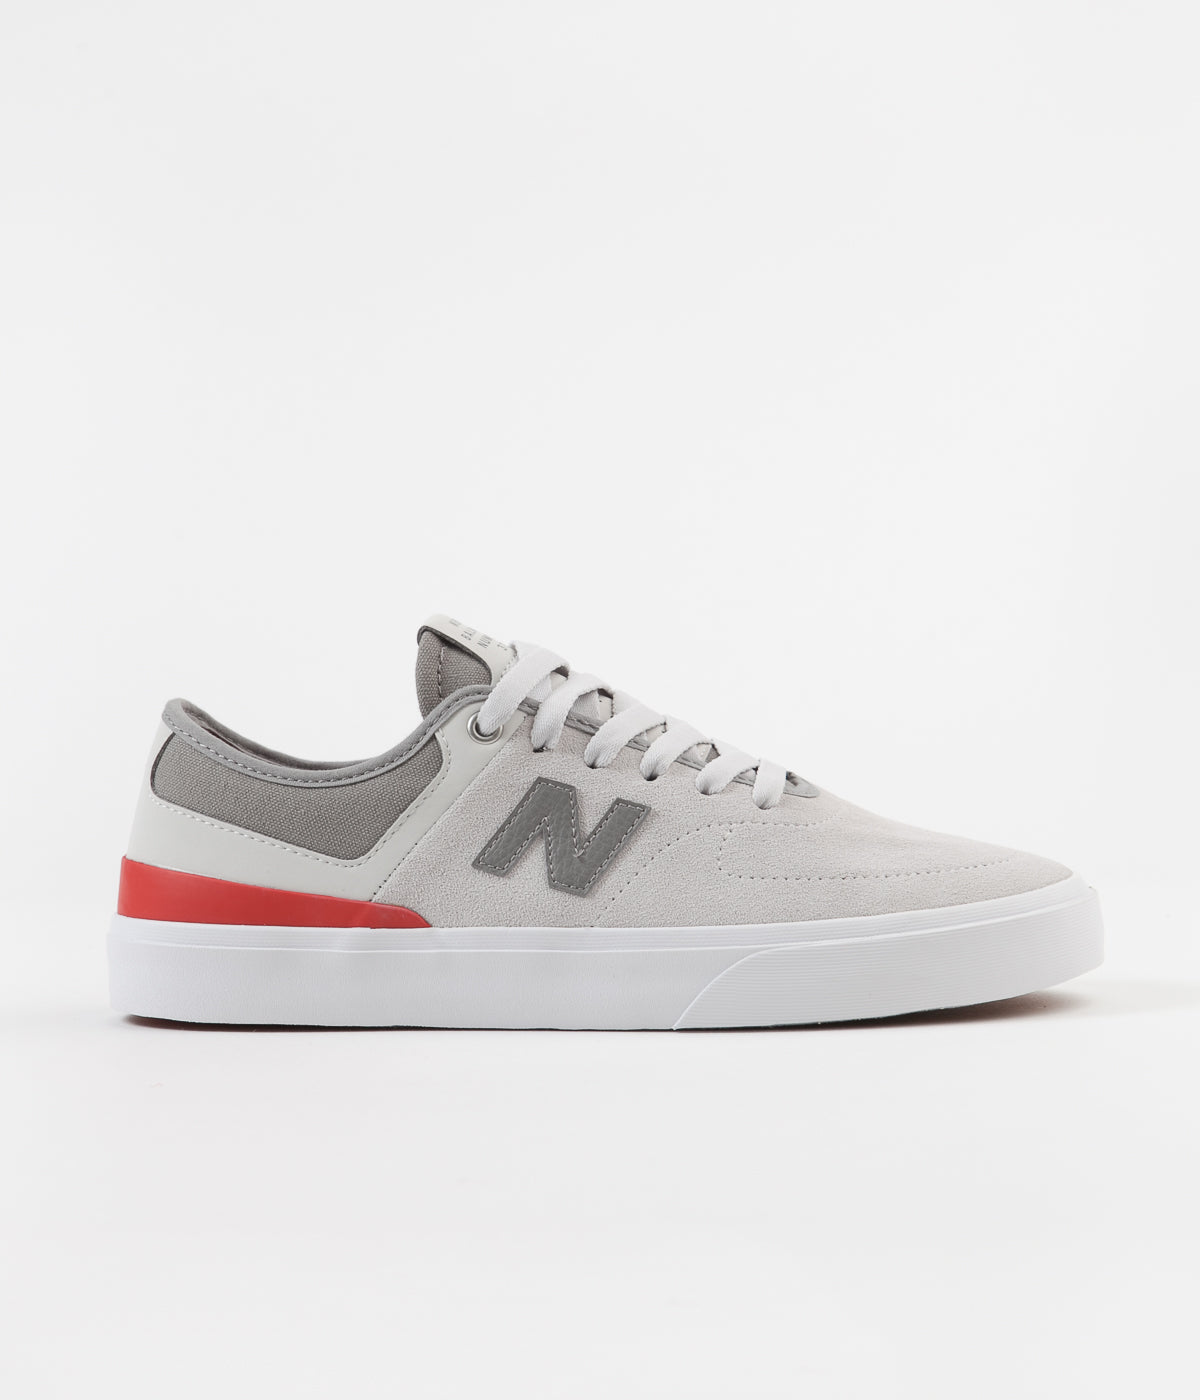 New Balance Numeric 379 Shoes - Grey 